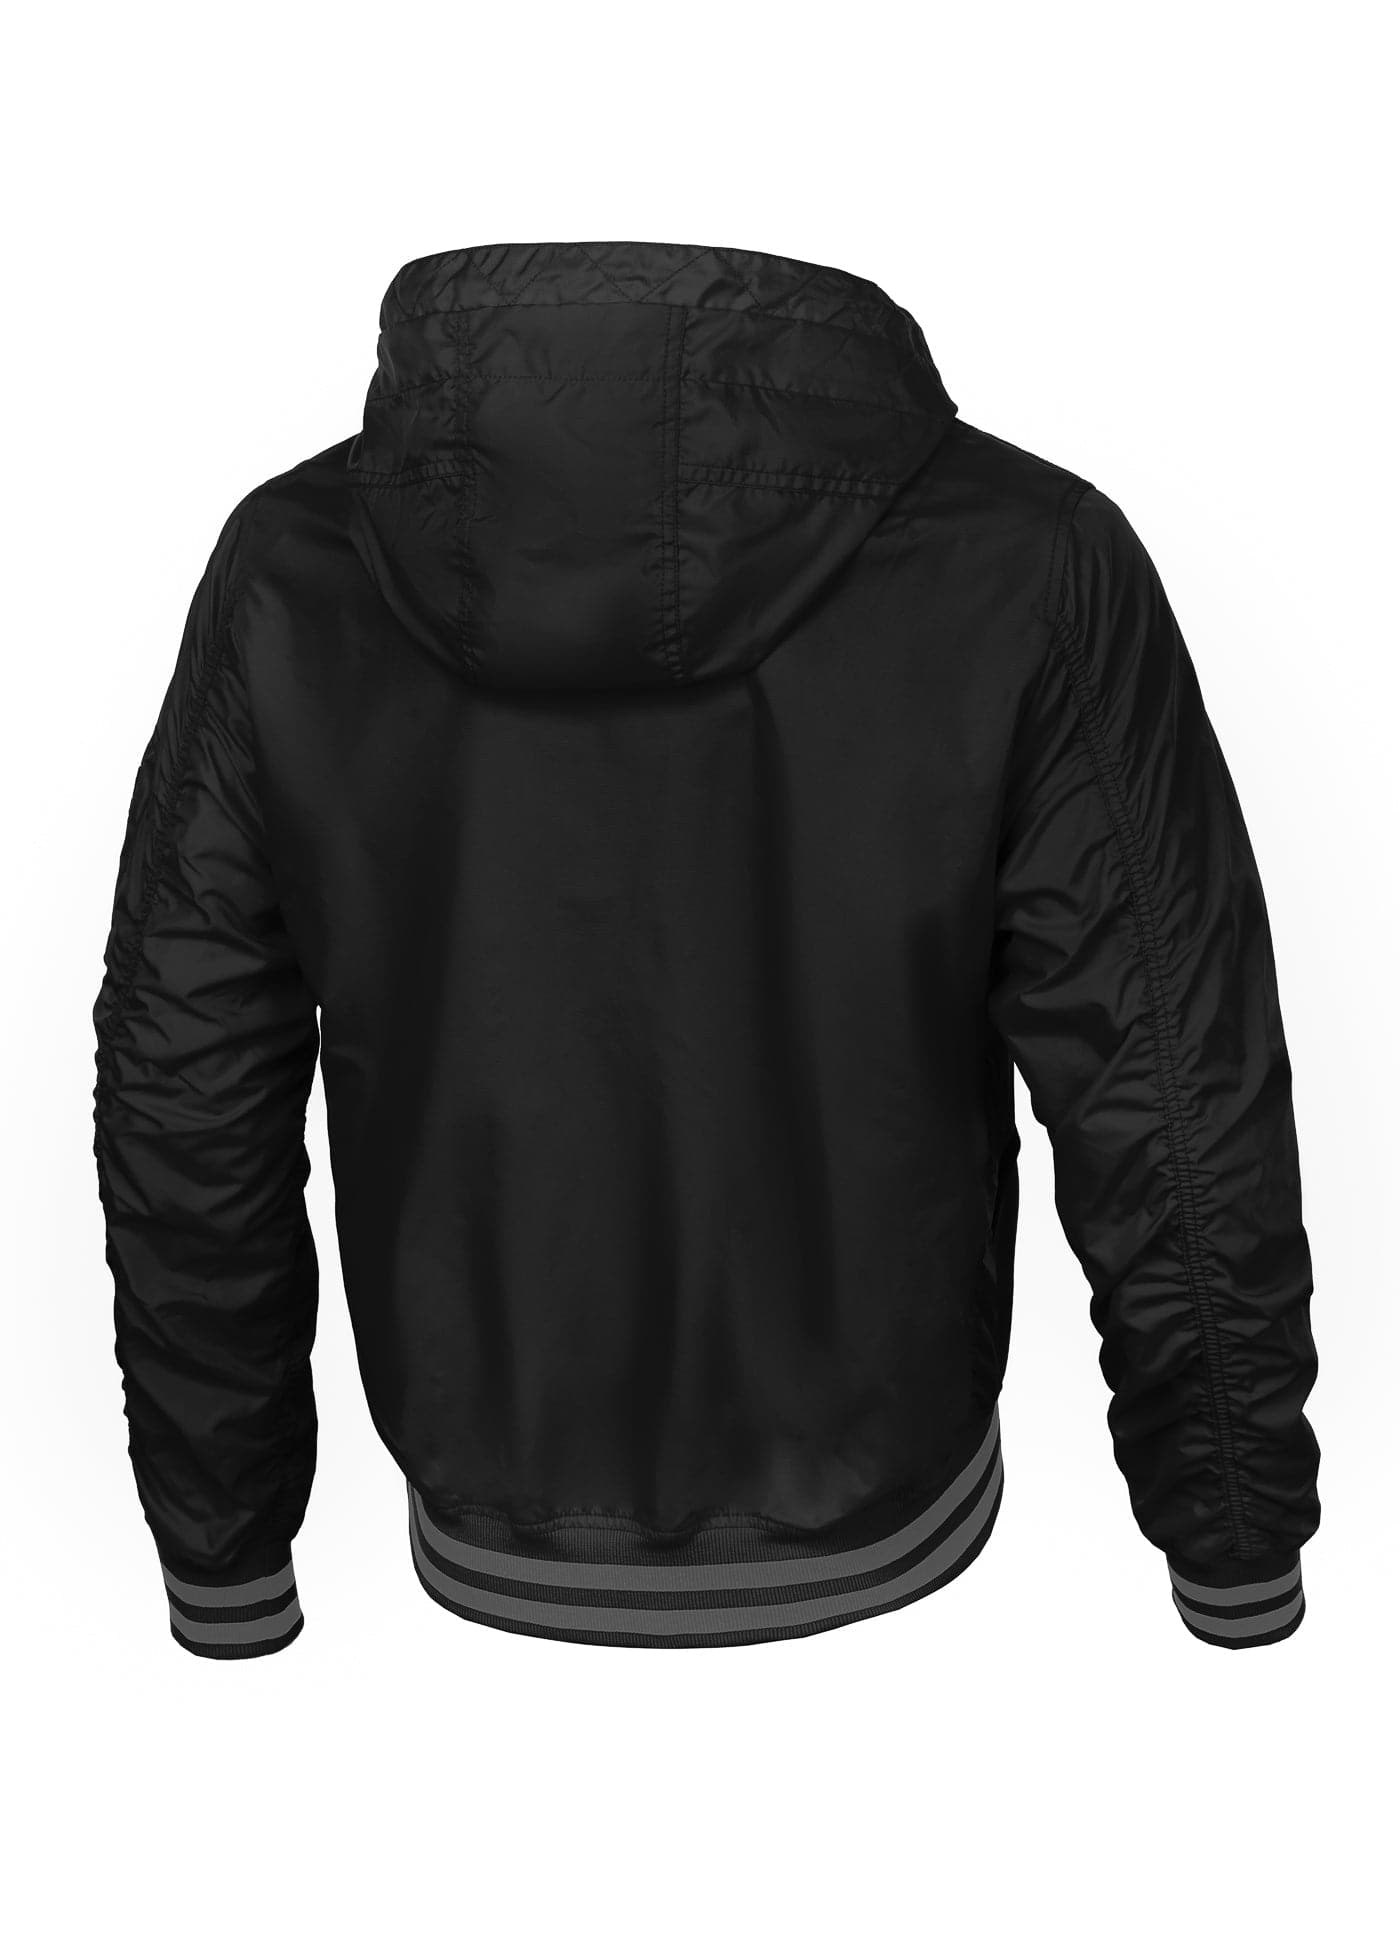 Pitbull Jacket Buy Store | OVERPARK Black